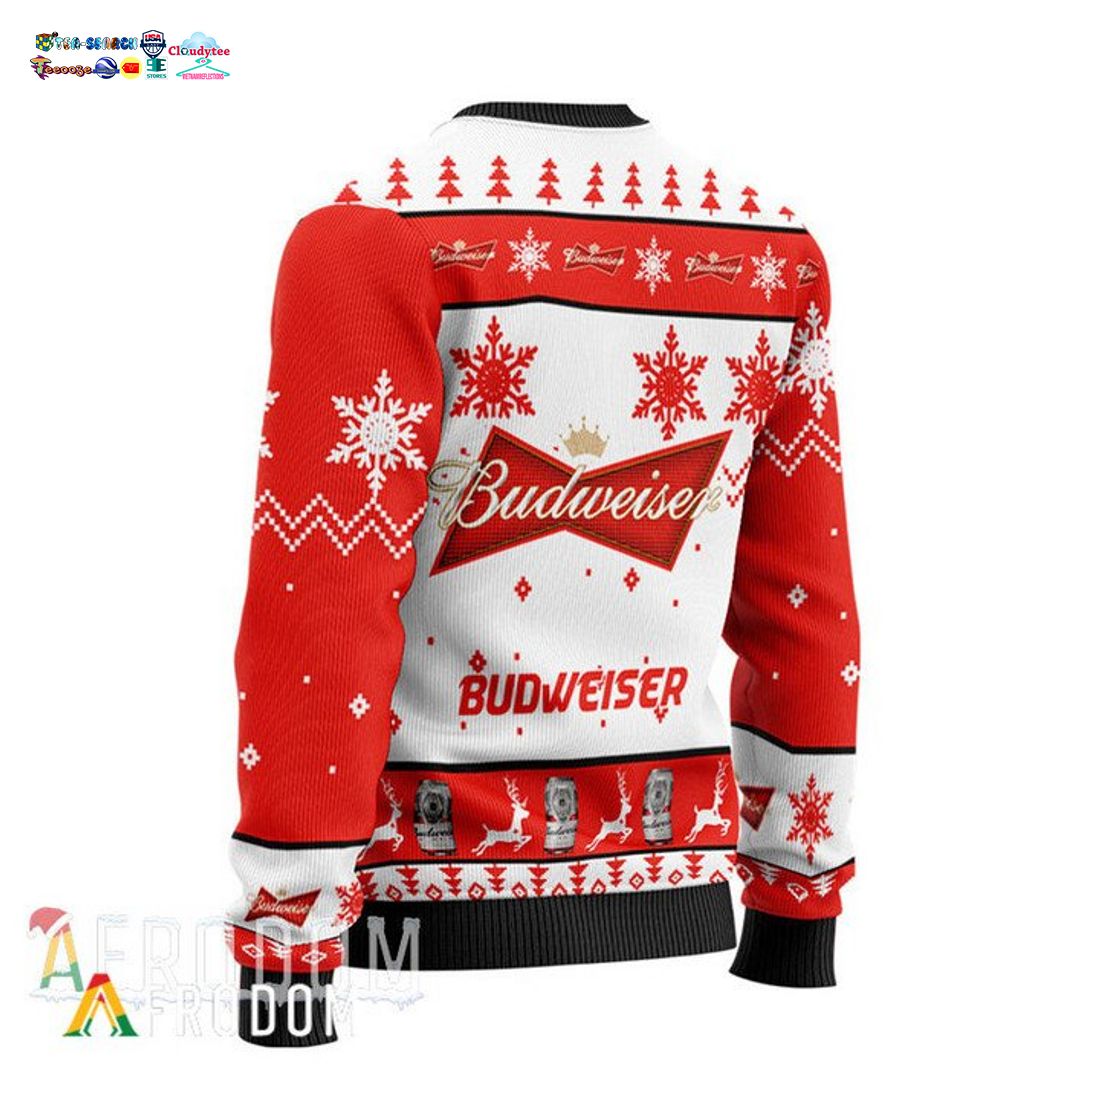 Budweiser Ver 2 Ugly Christmas Sweater